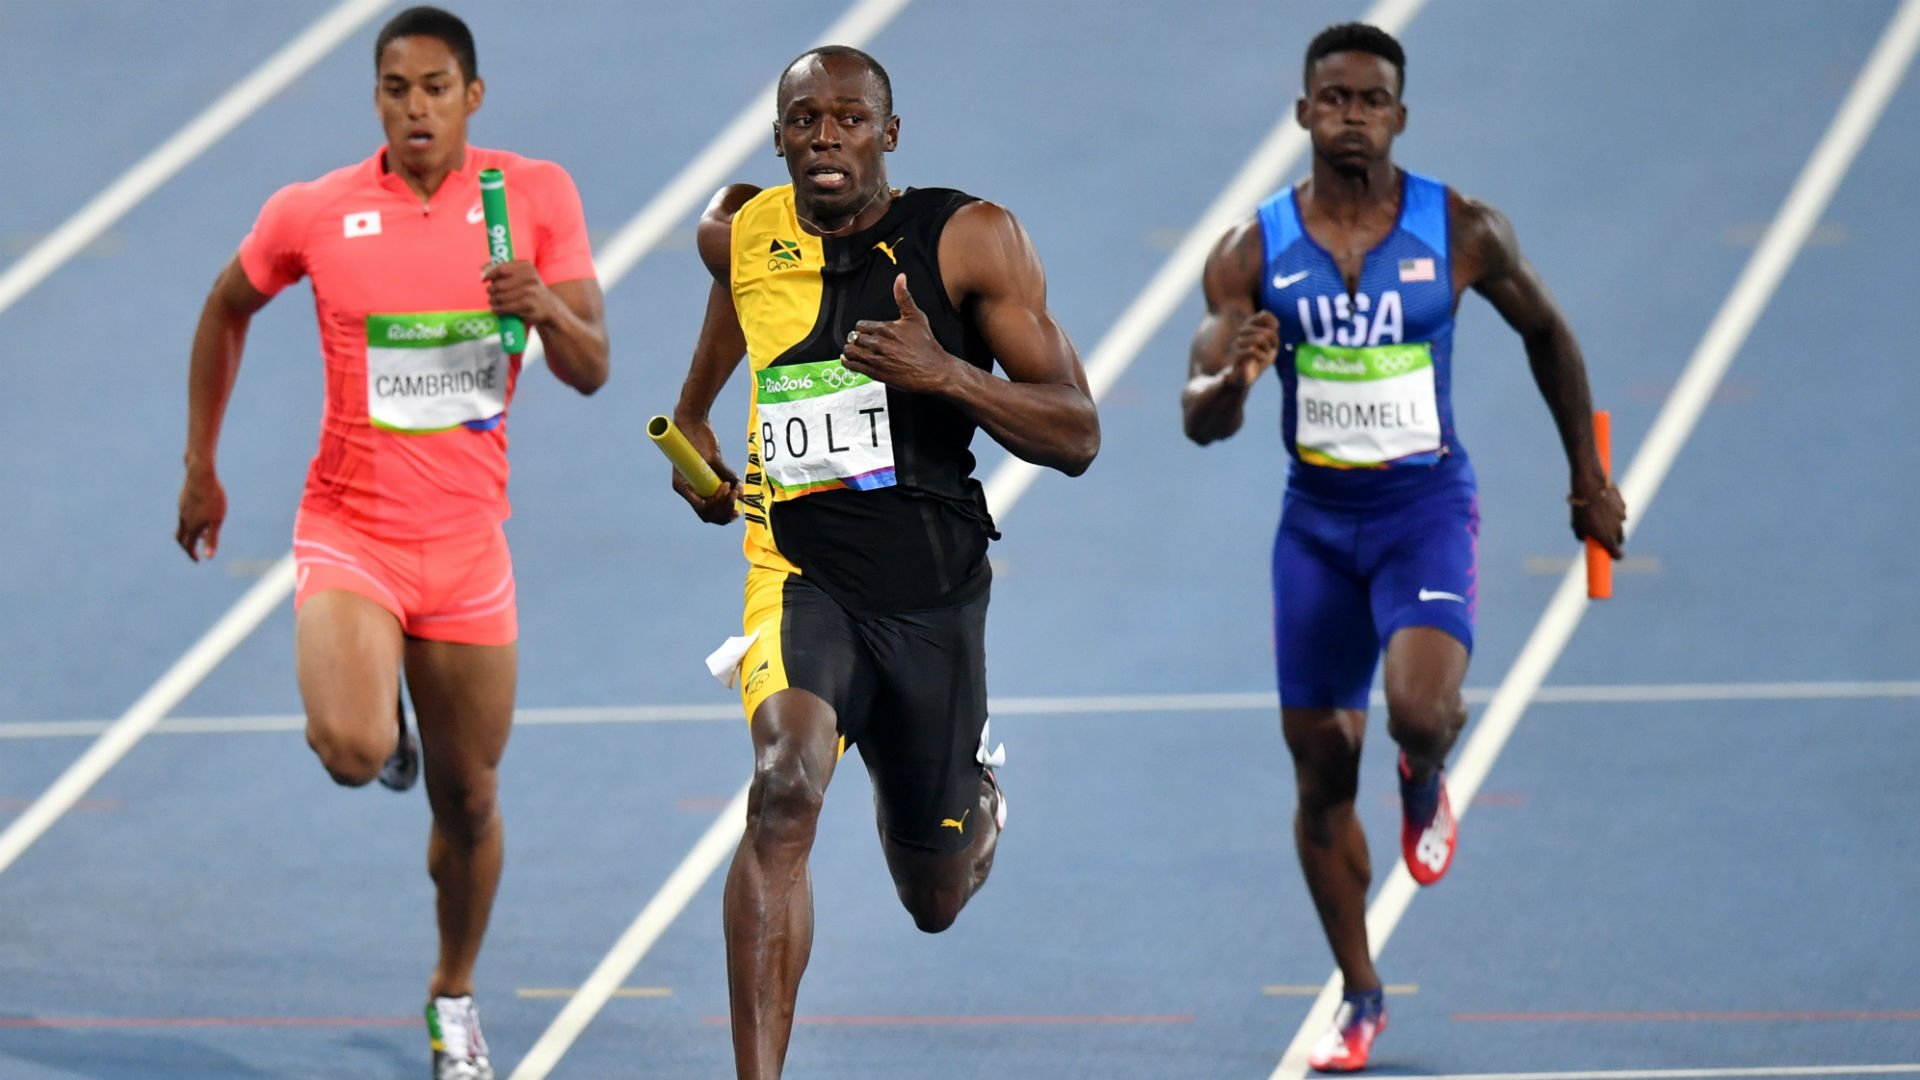 Rio Olympics 2016 U.S. men's 4x100m relay disqualified, loses bronze